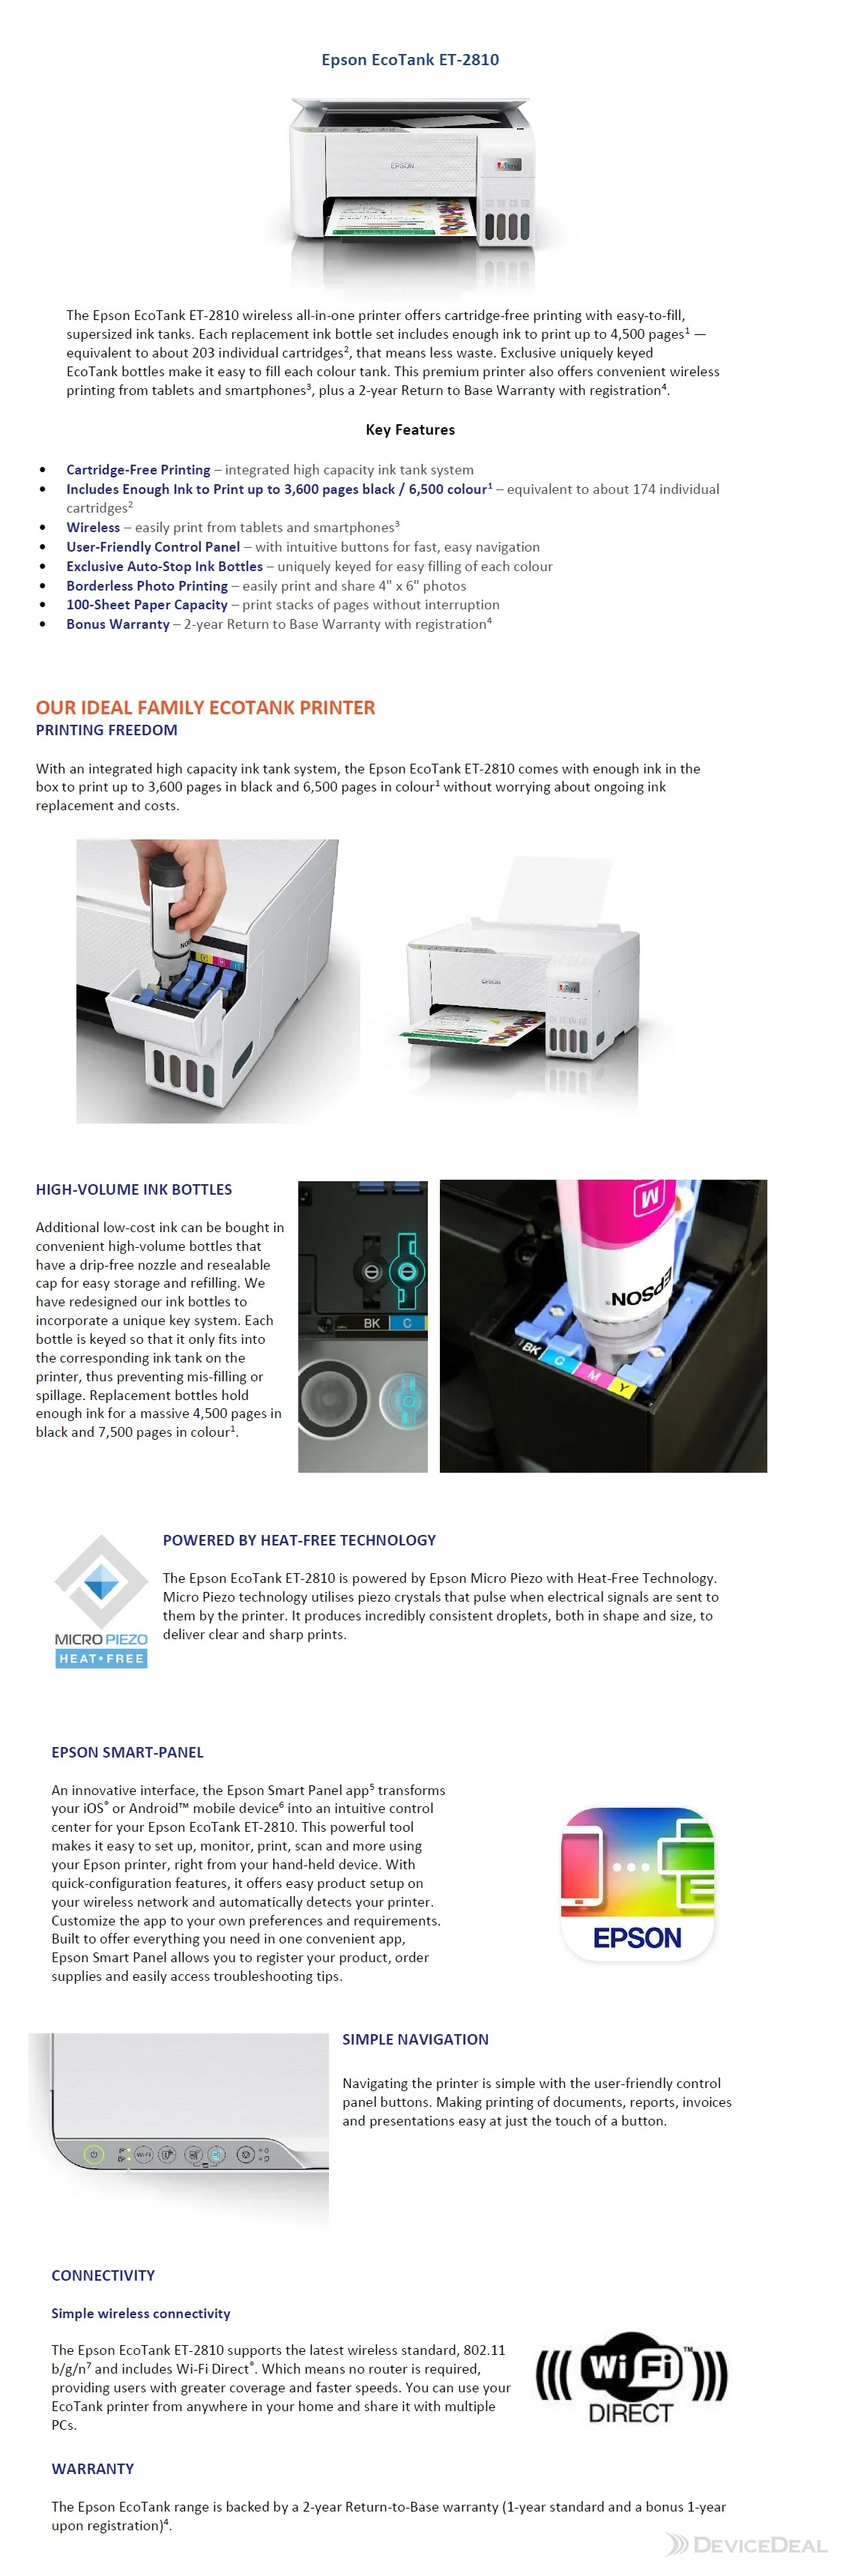 Epson EcoTank ET-2810: How to Set Up Duplex Printing 